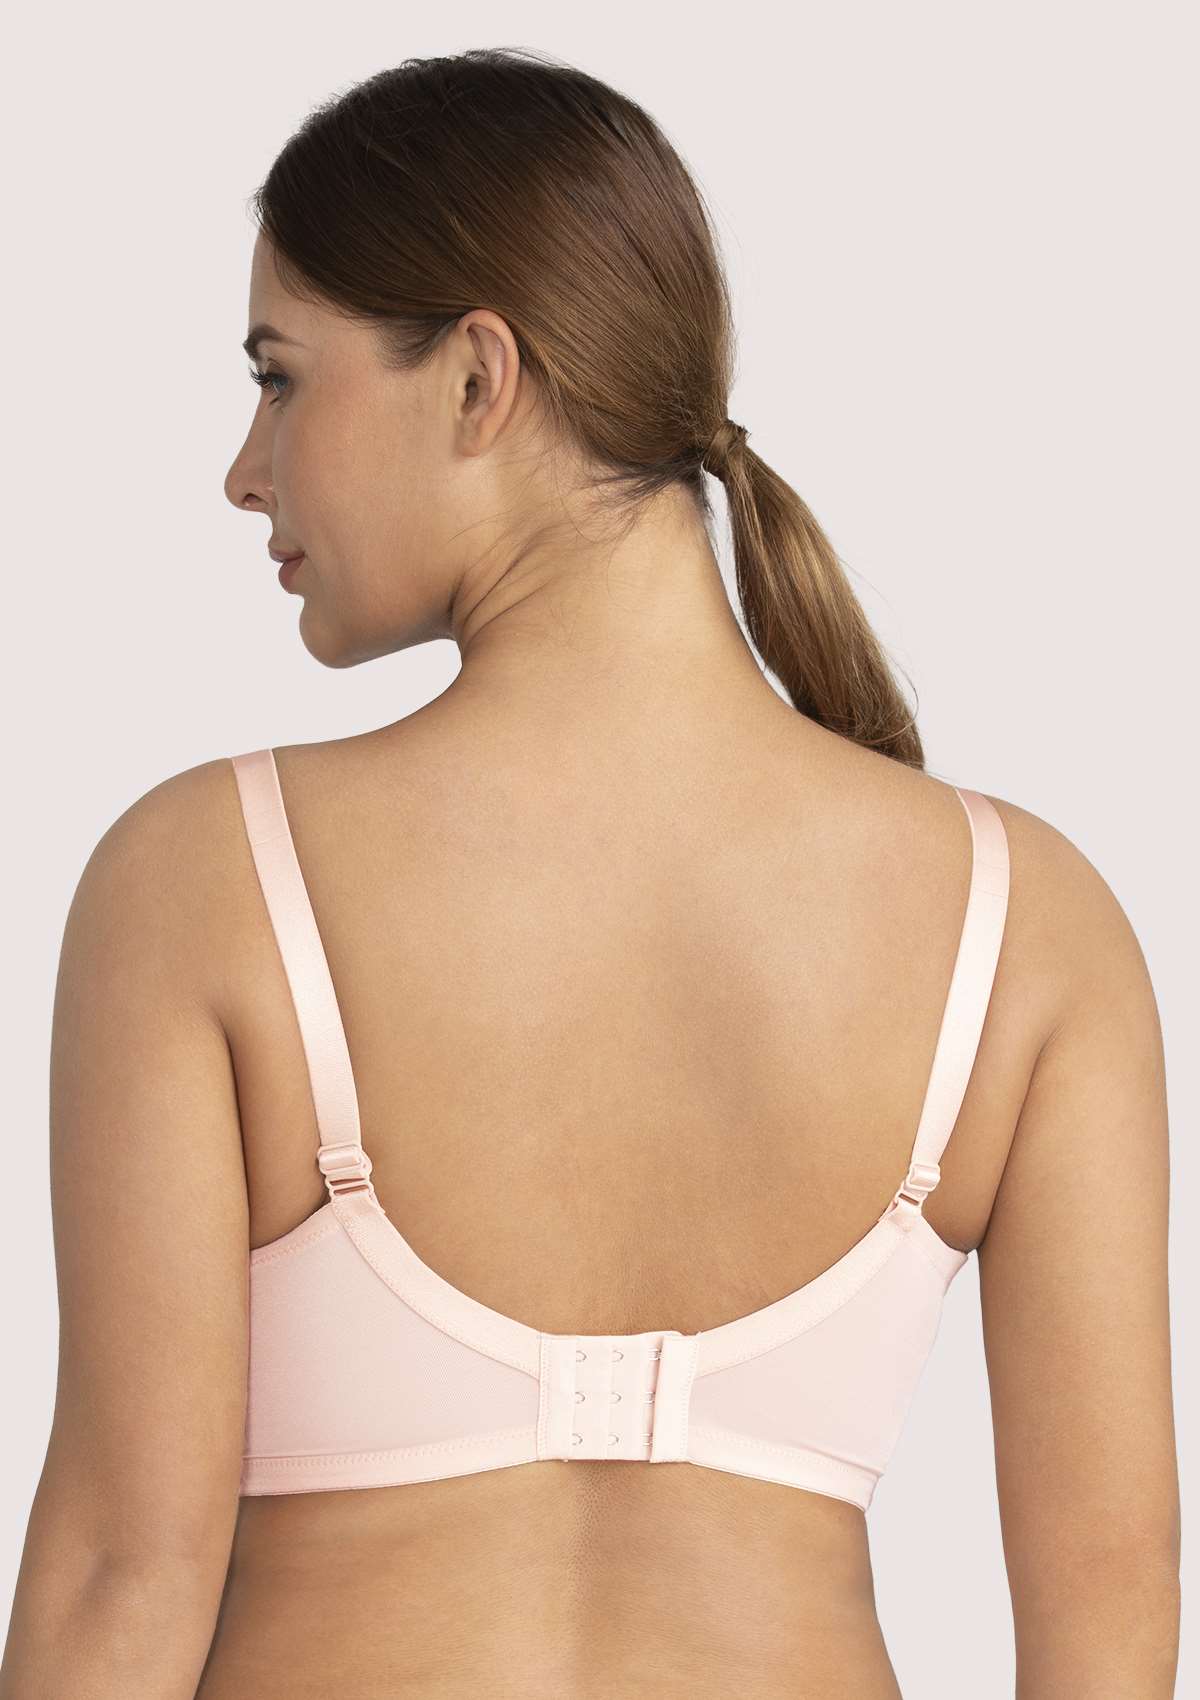 HSIA Sunflower Matching Bra And Panties Set: Comfortable Plus Size Bra - Pink / 34 / H